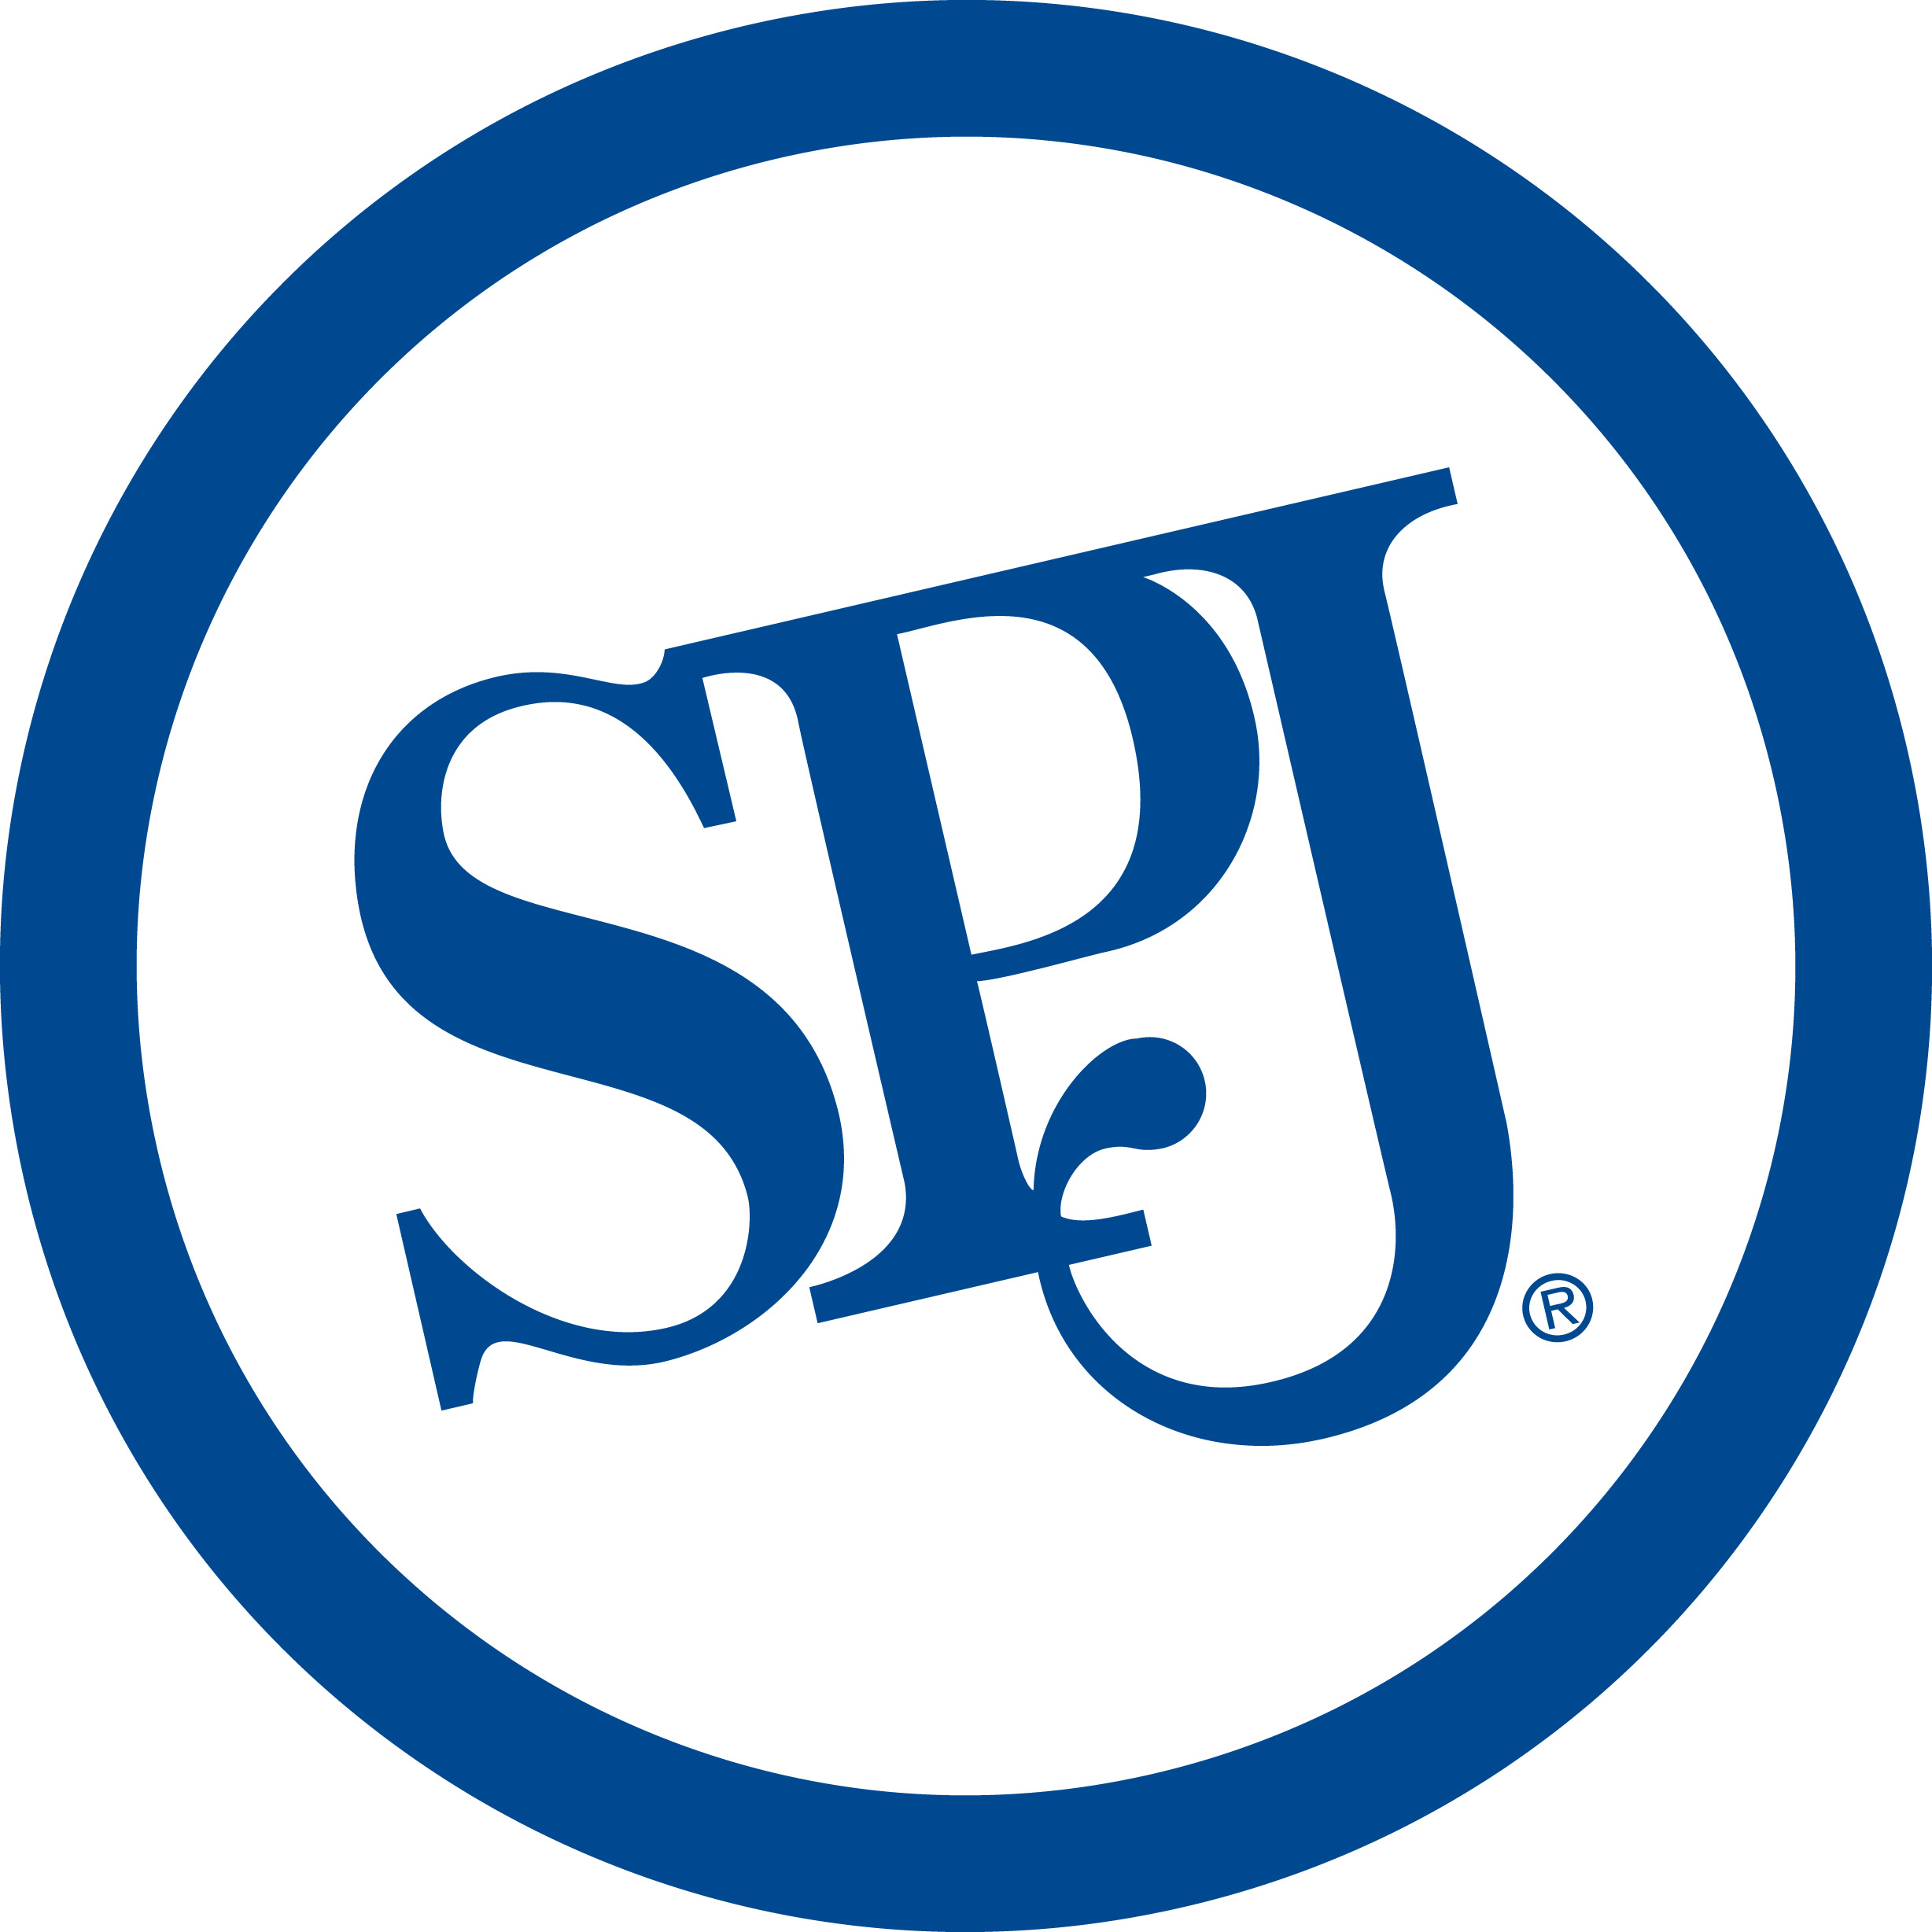 SPJ NorCal, First Amendment Coalition seek award nominations